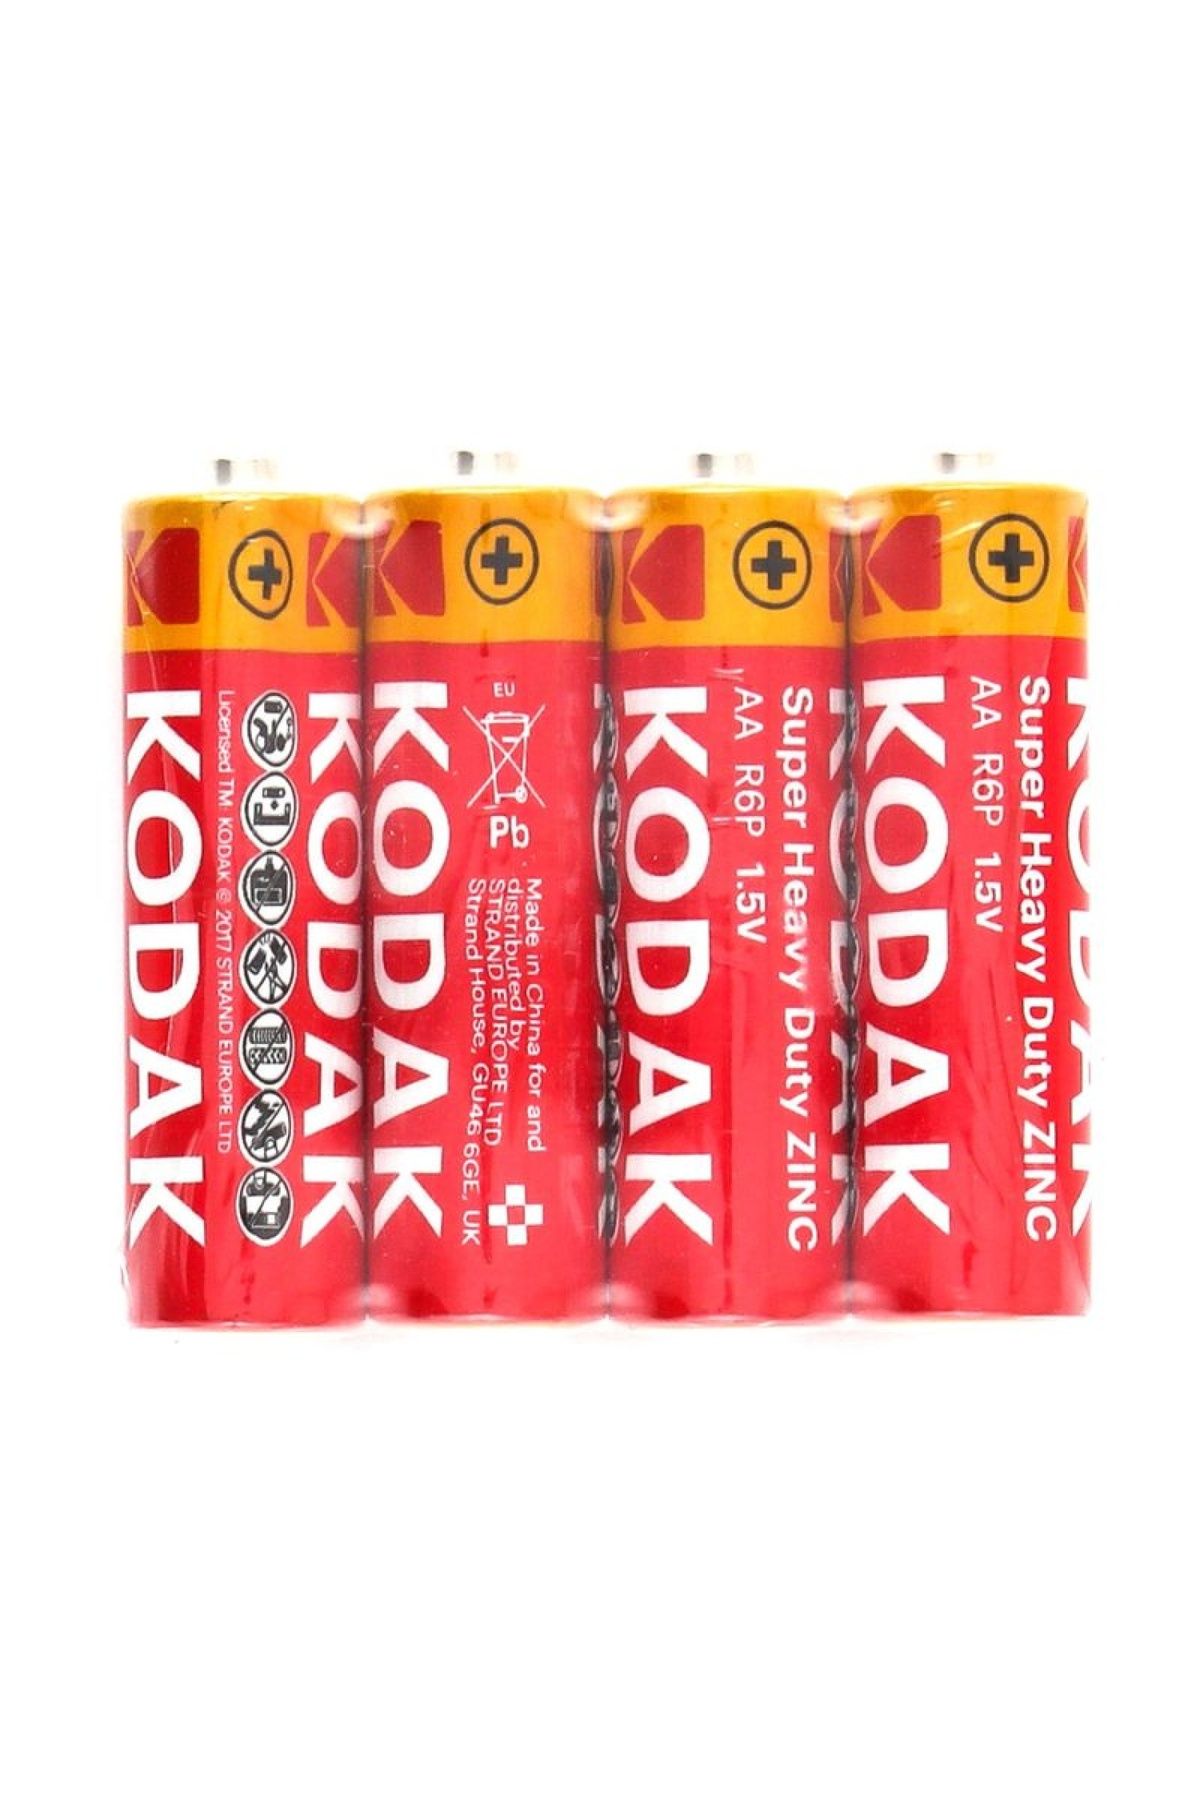 maarketim Kodak AA Pil Super Heavy Duty Çinko Karbon Kalem Pil 60 adet